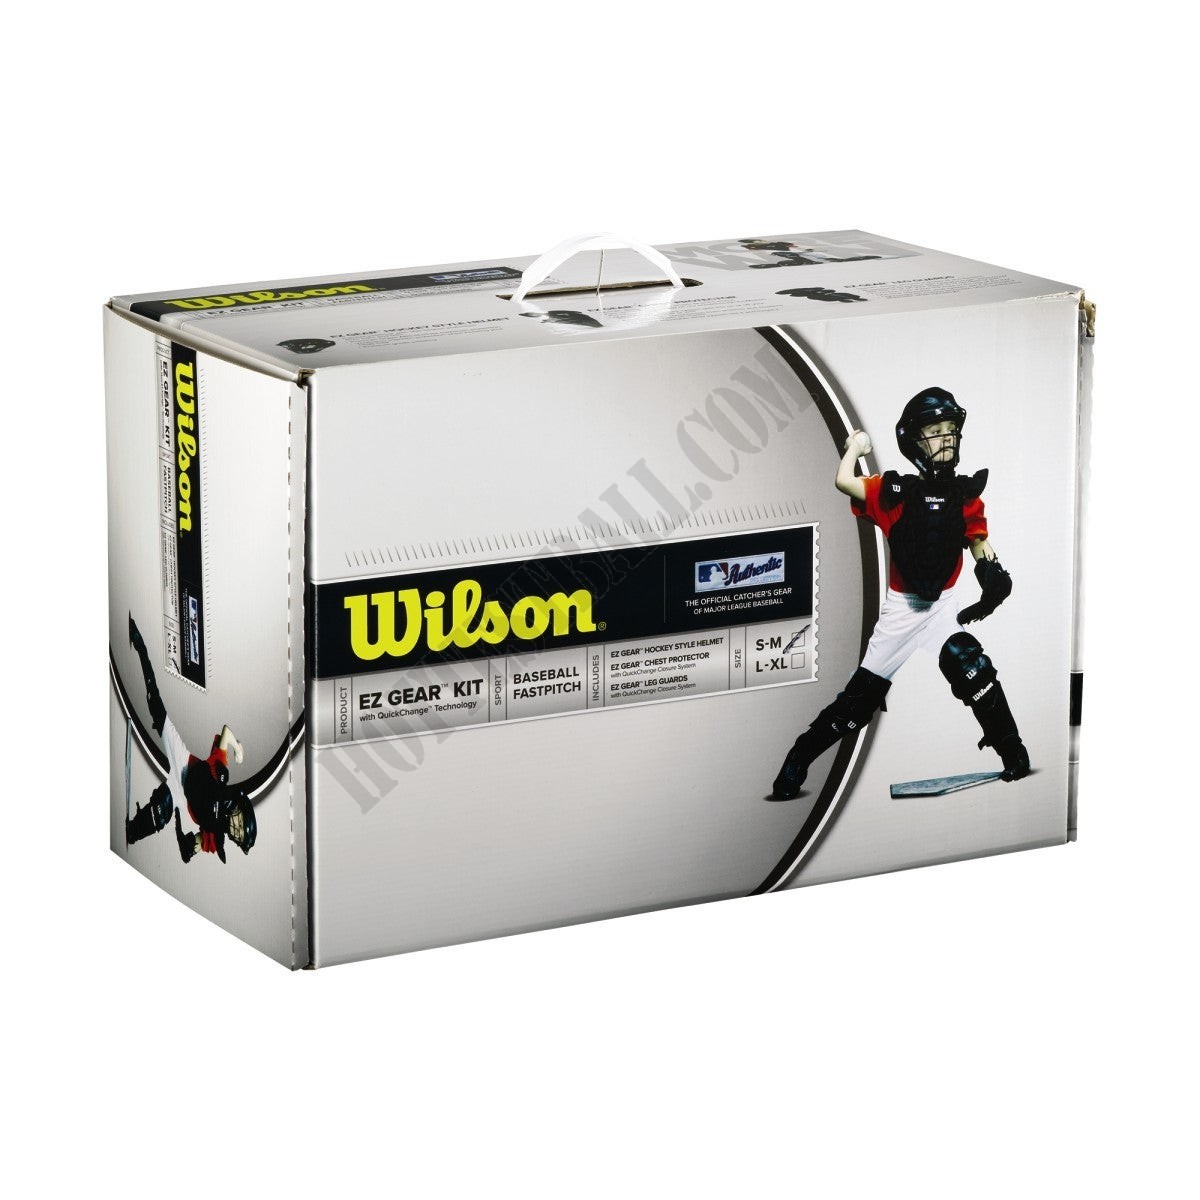 EZ Gear Catcher's Kit - Tampa Bay Rays - Wilson Discount Store - -5